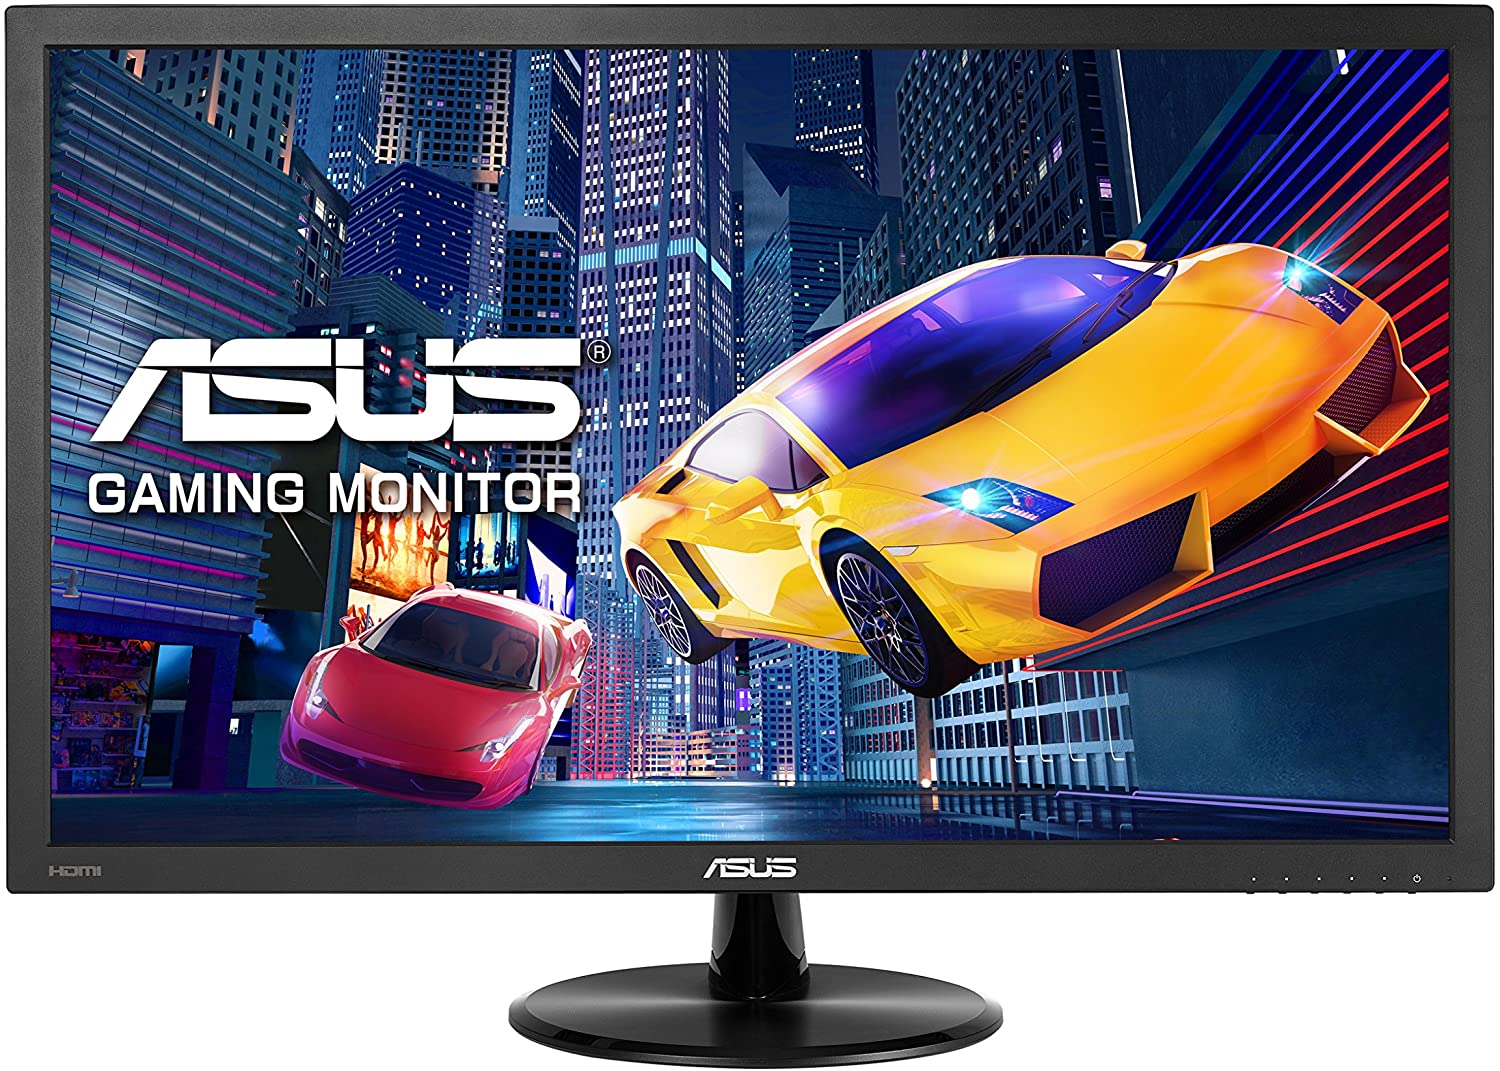 Asus Vp228He 21.5&rdquo; Full HD 1920X1080 1Ms HDMI Vga Eye Care Monitor 3 Year Warranty